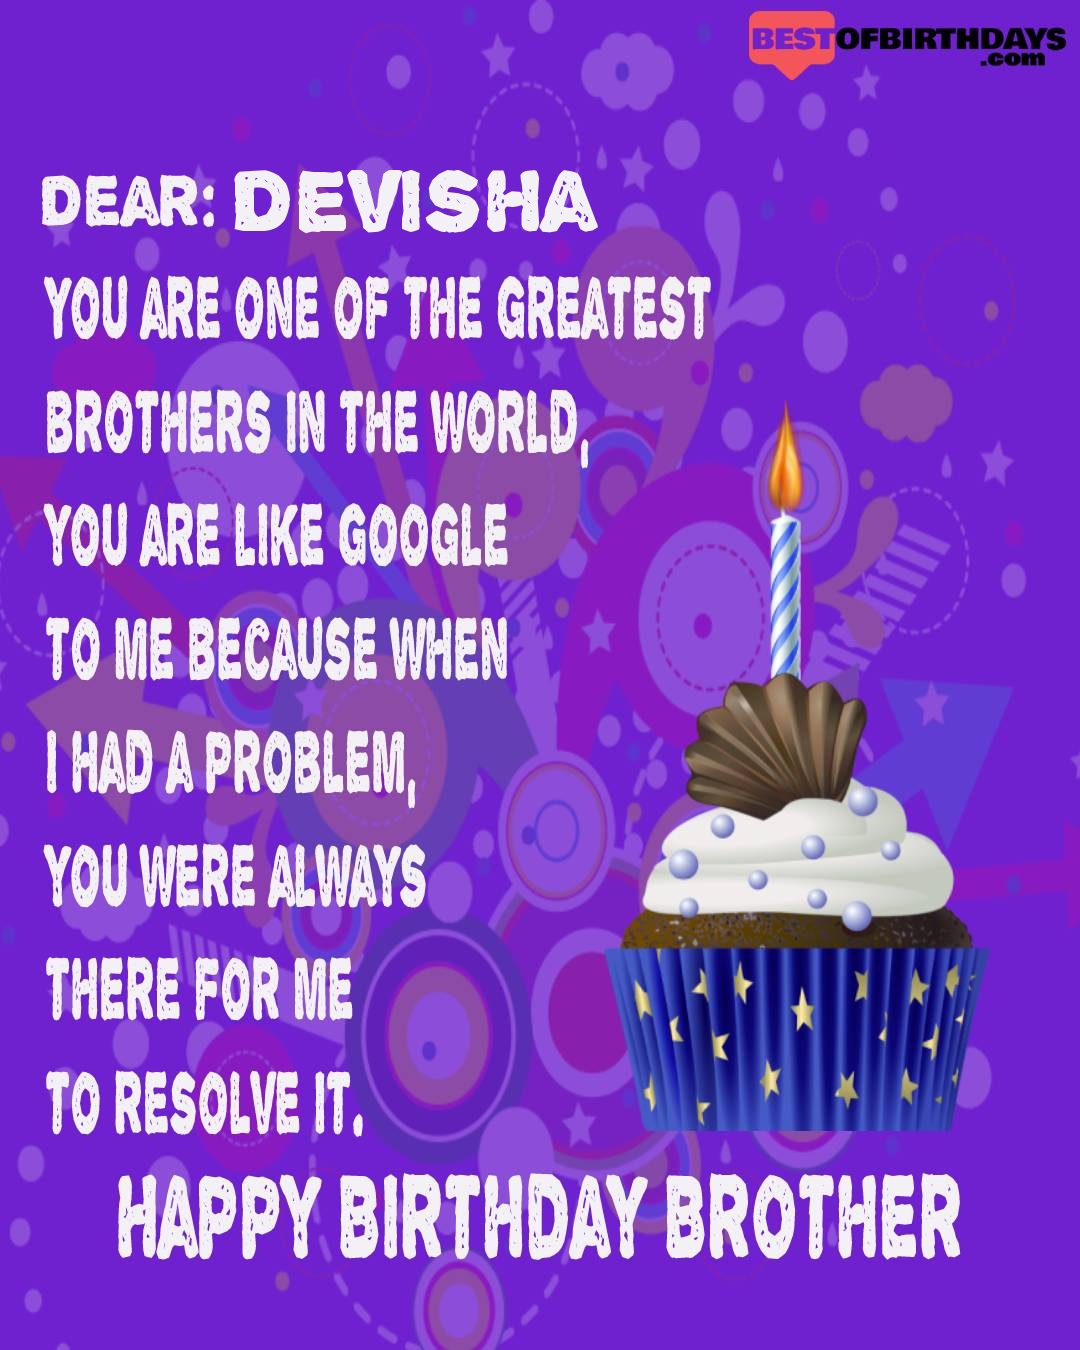 Happy birthday devisha bhai brother bro